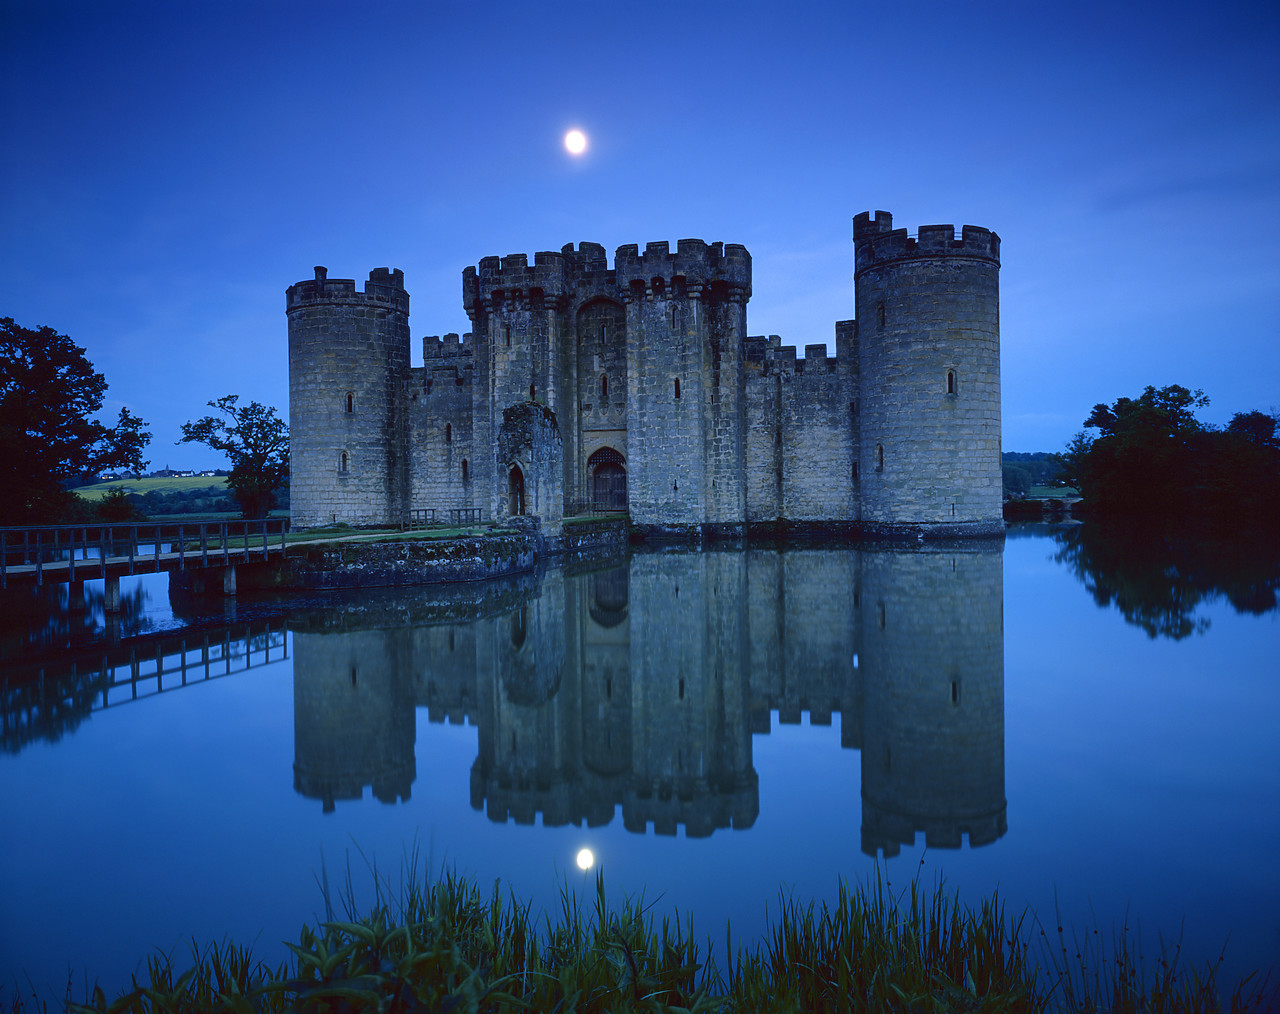 #881371-2 - Moonrise over Bodiam Castle, East Sussex, England